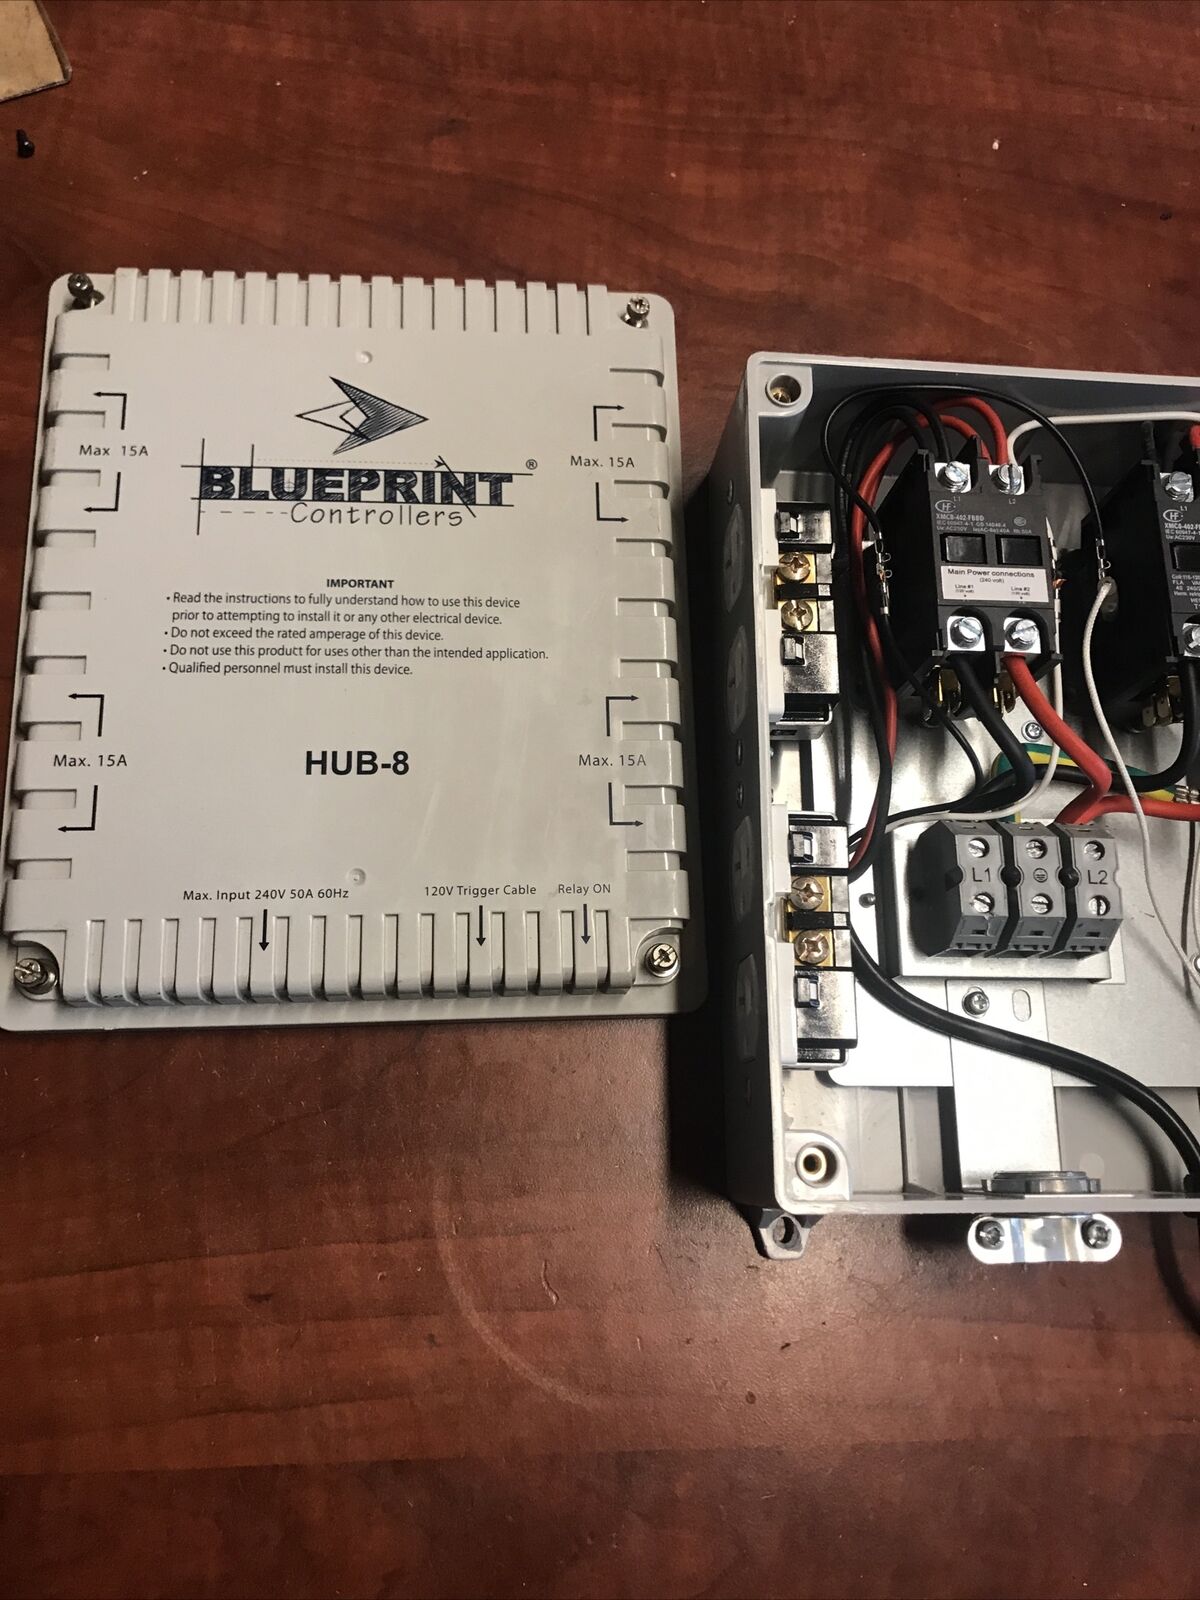 HID HUB 8 Site, HUB-8A Ballast Controller - Blueprint Controllers  NIB - Tested